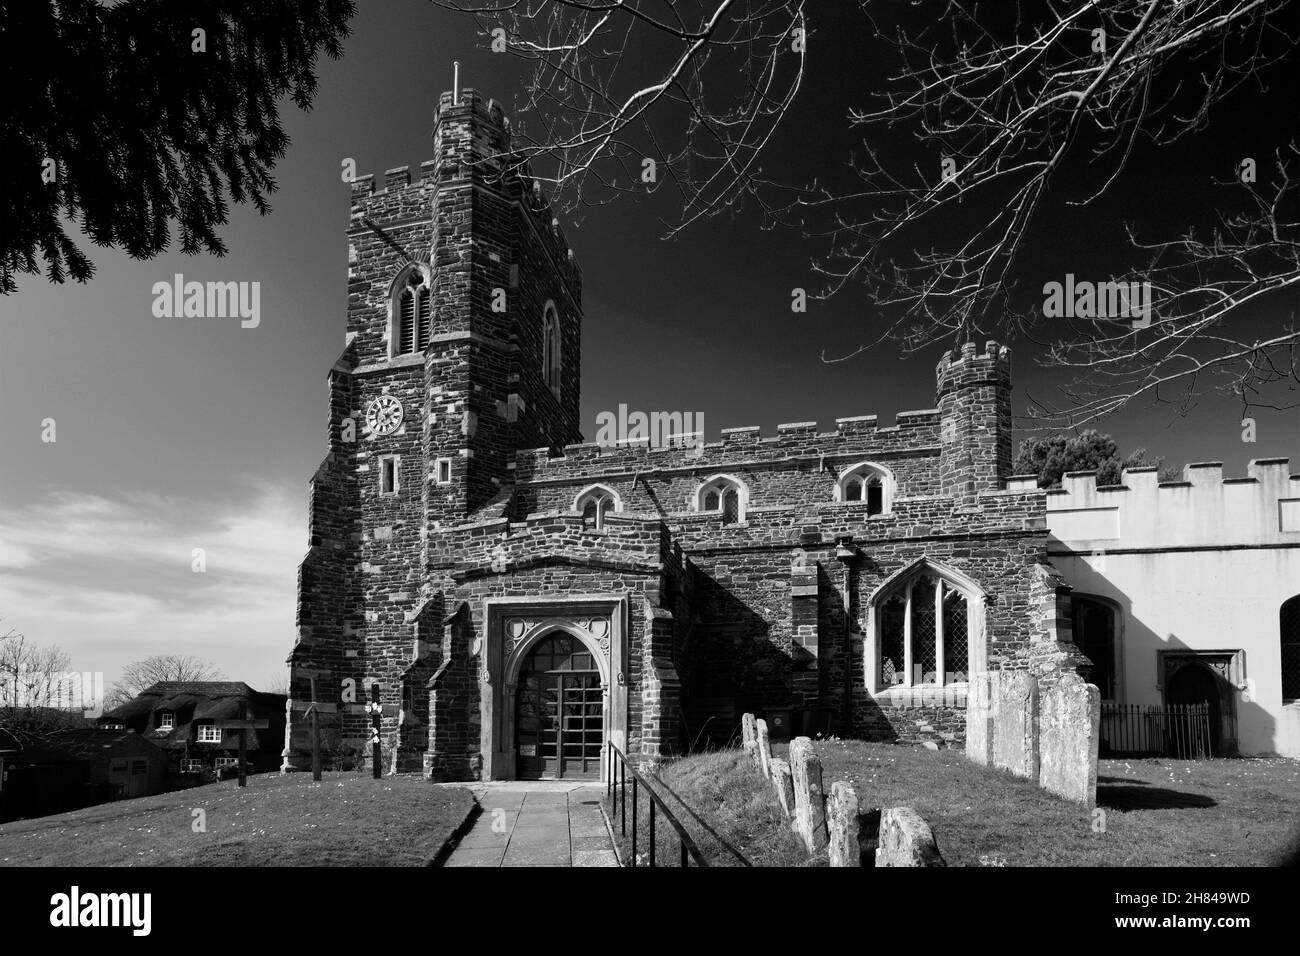 St Johns church, Flitton village, Bedfordshire England, UK Stock Photo